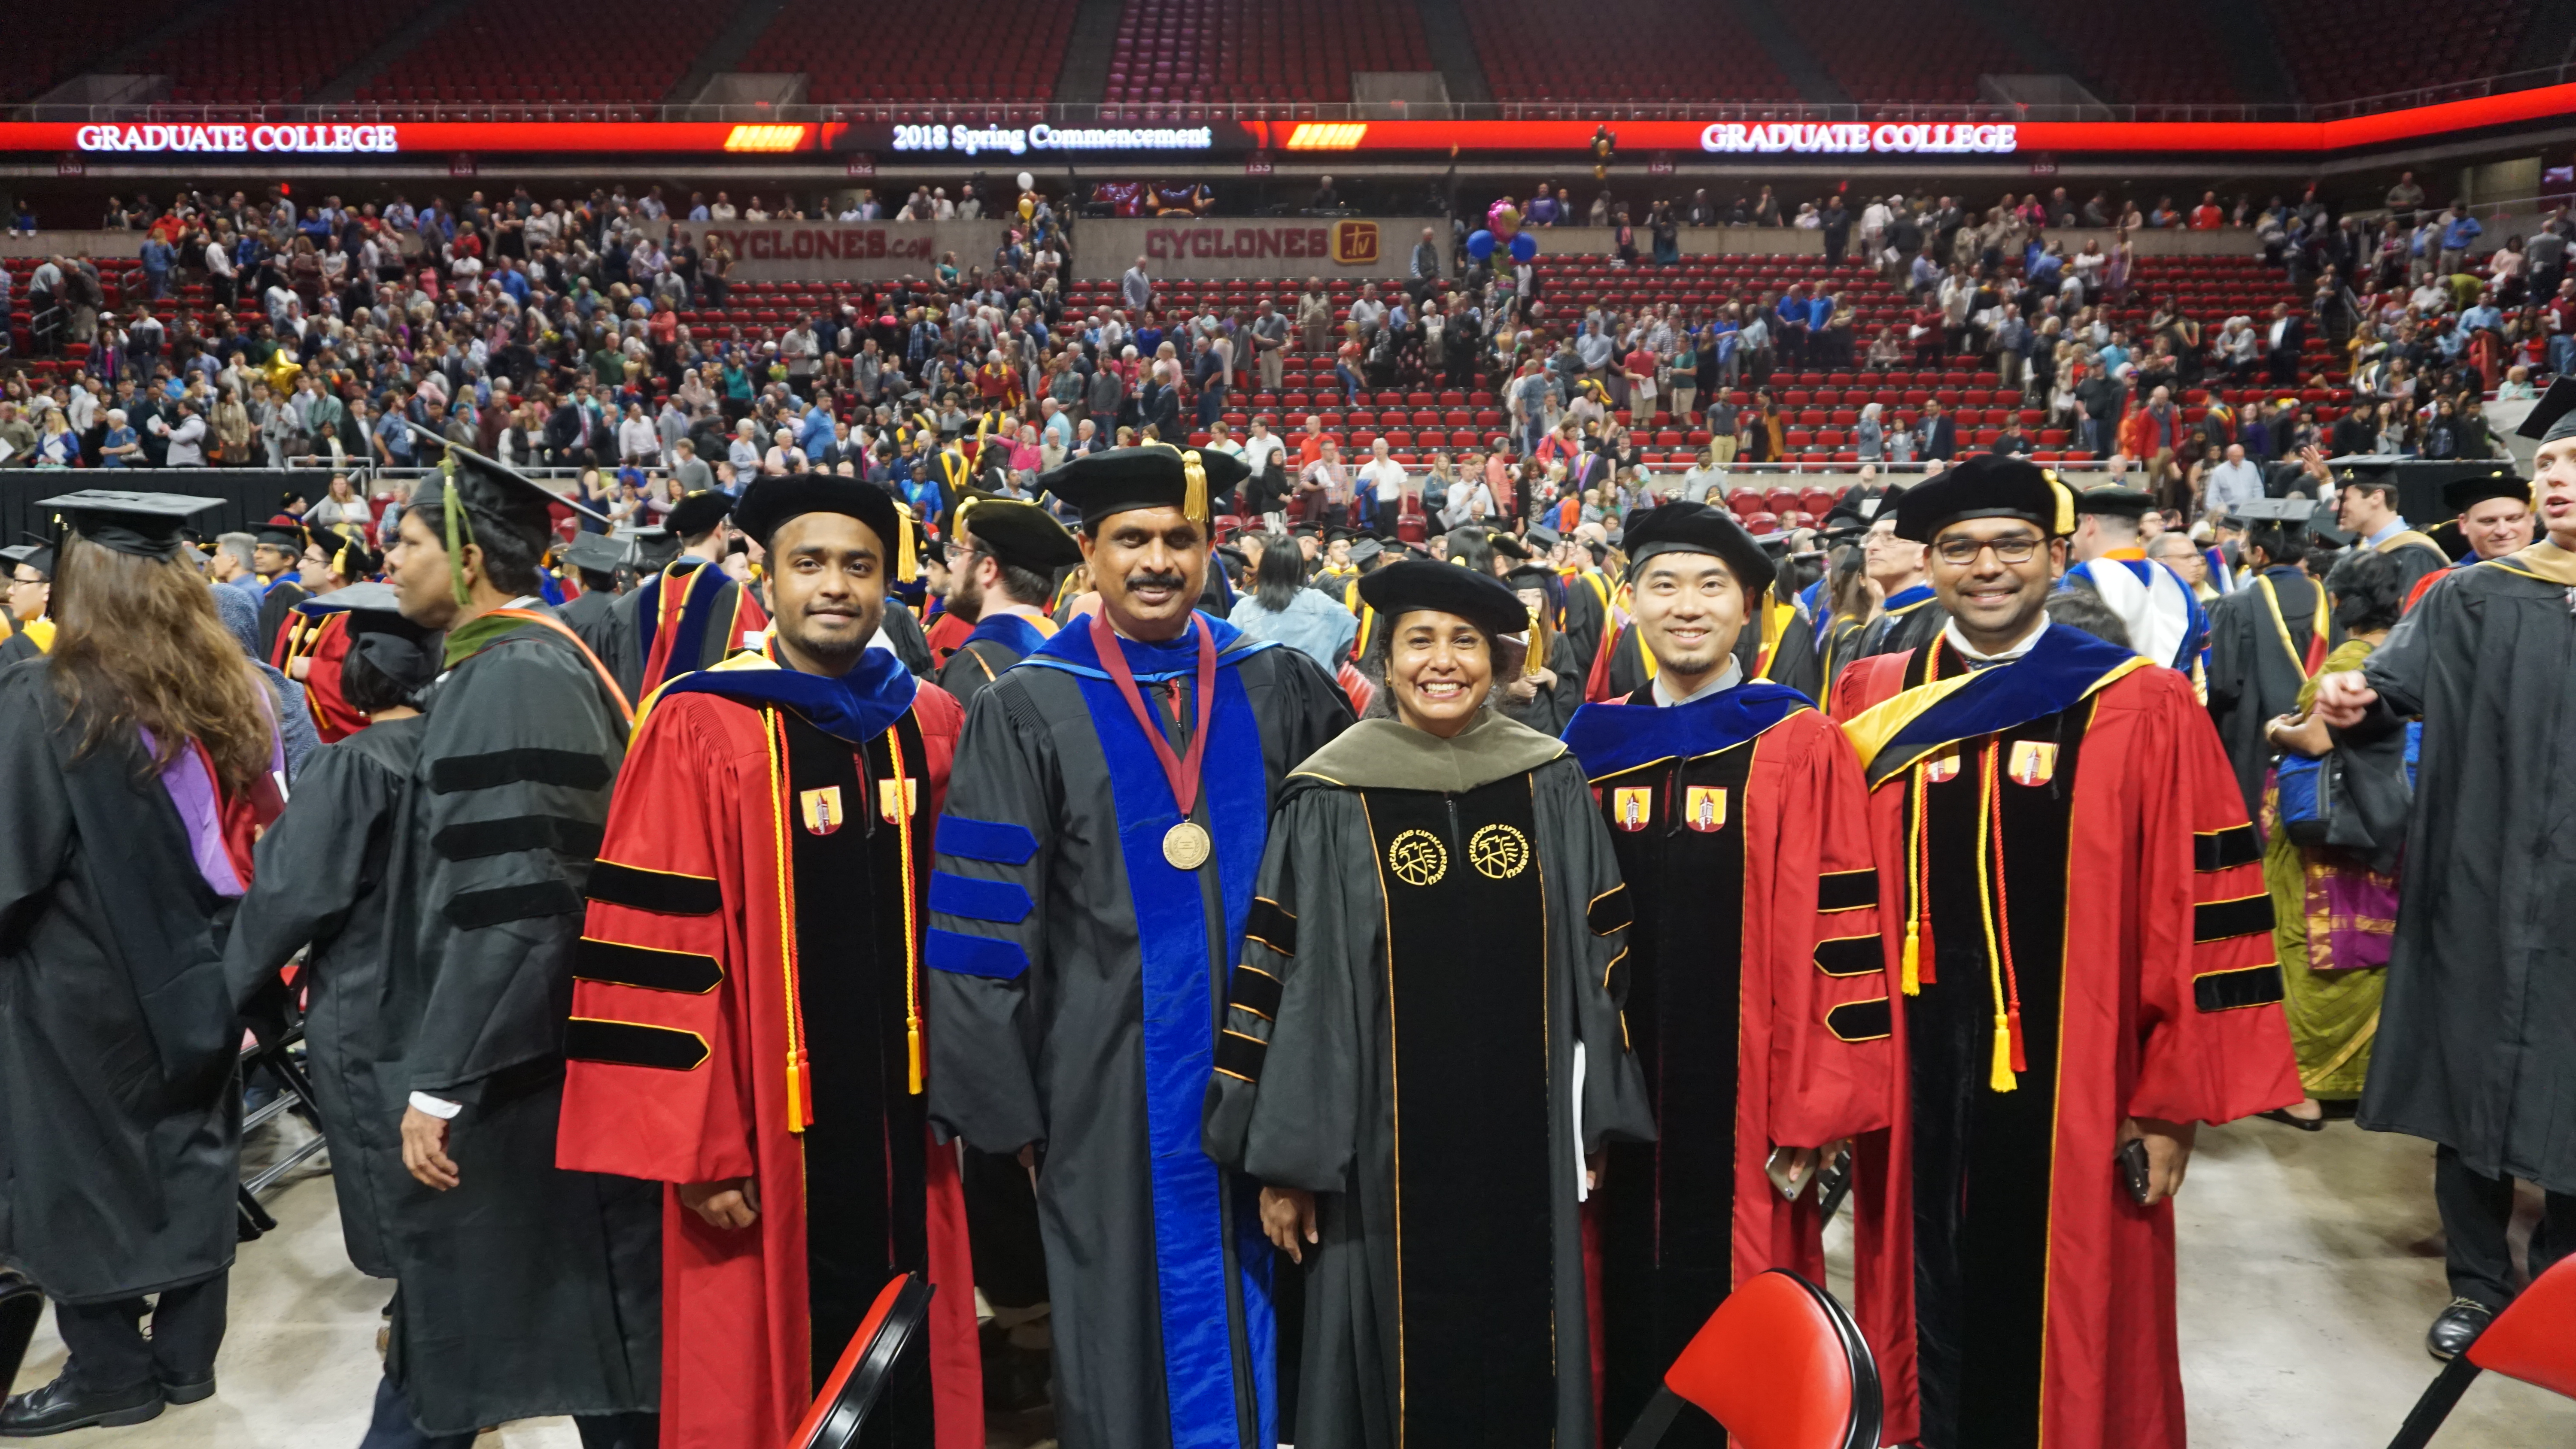 Spring 2018 PhD Graduates, Dr. Anumantha Kanthasamy and Dr. Arthi Kanthasamy, Along with Graduates Dan Luo, Naveen Kondru, and Adhithiya Manohar-Charli